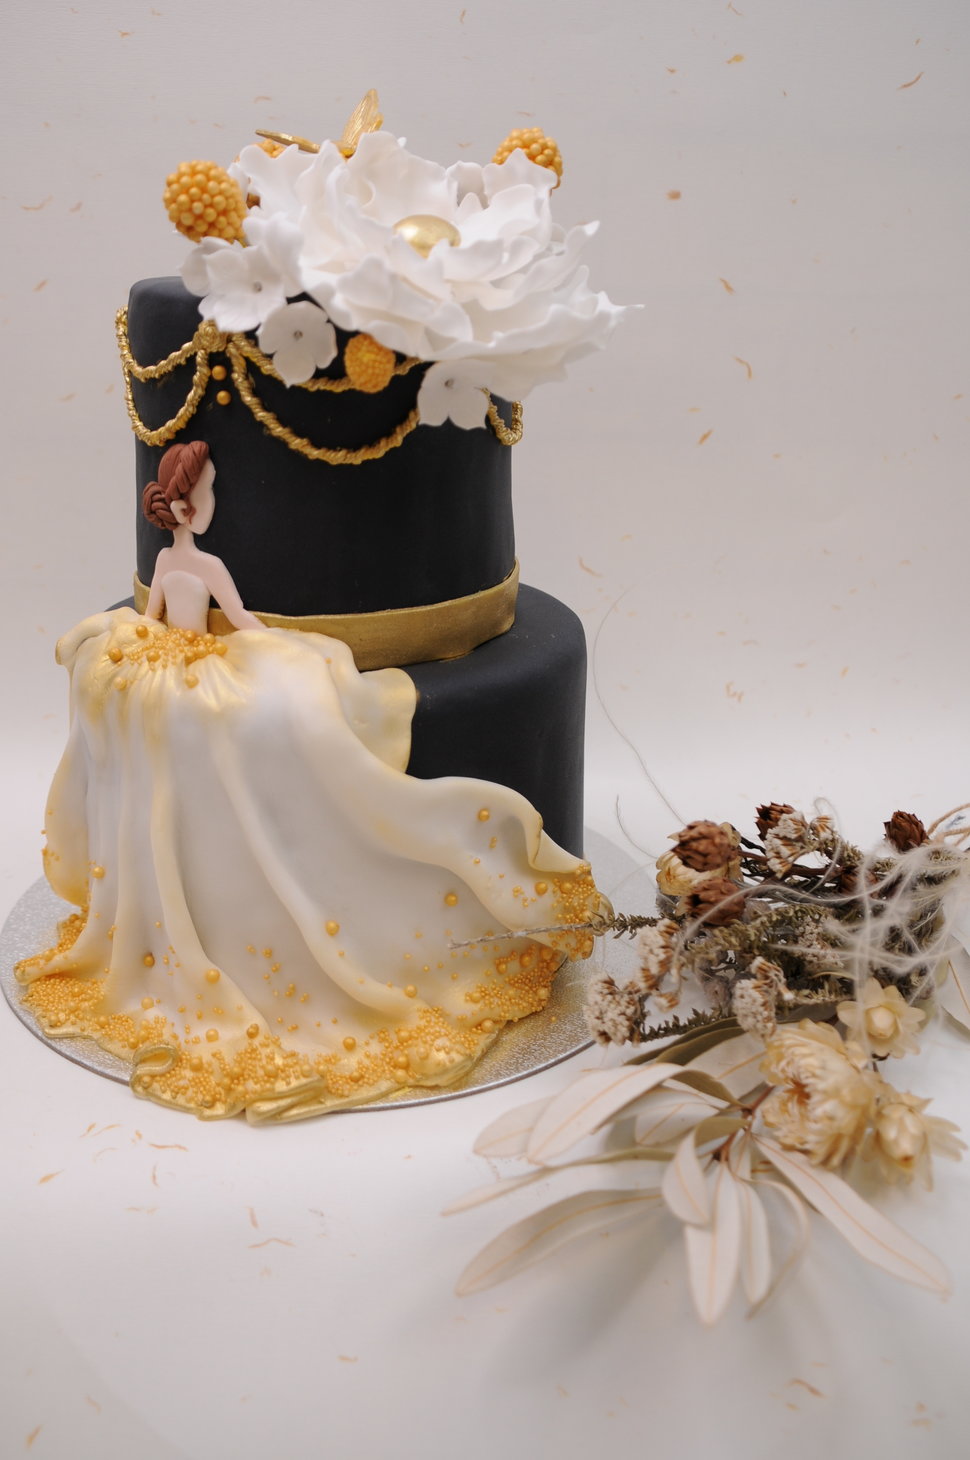 DSC_6385 - WC婚禮蛋糕《結婚吧》